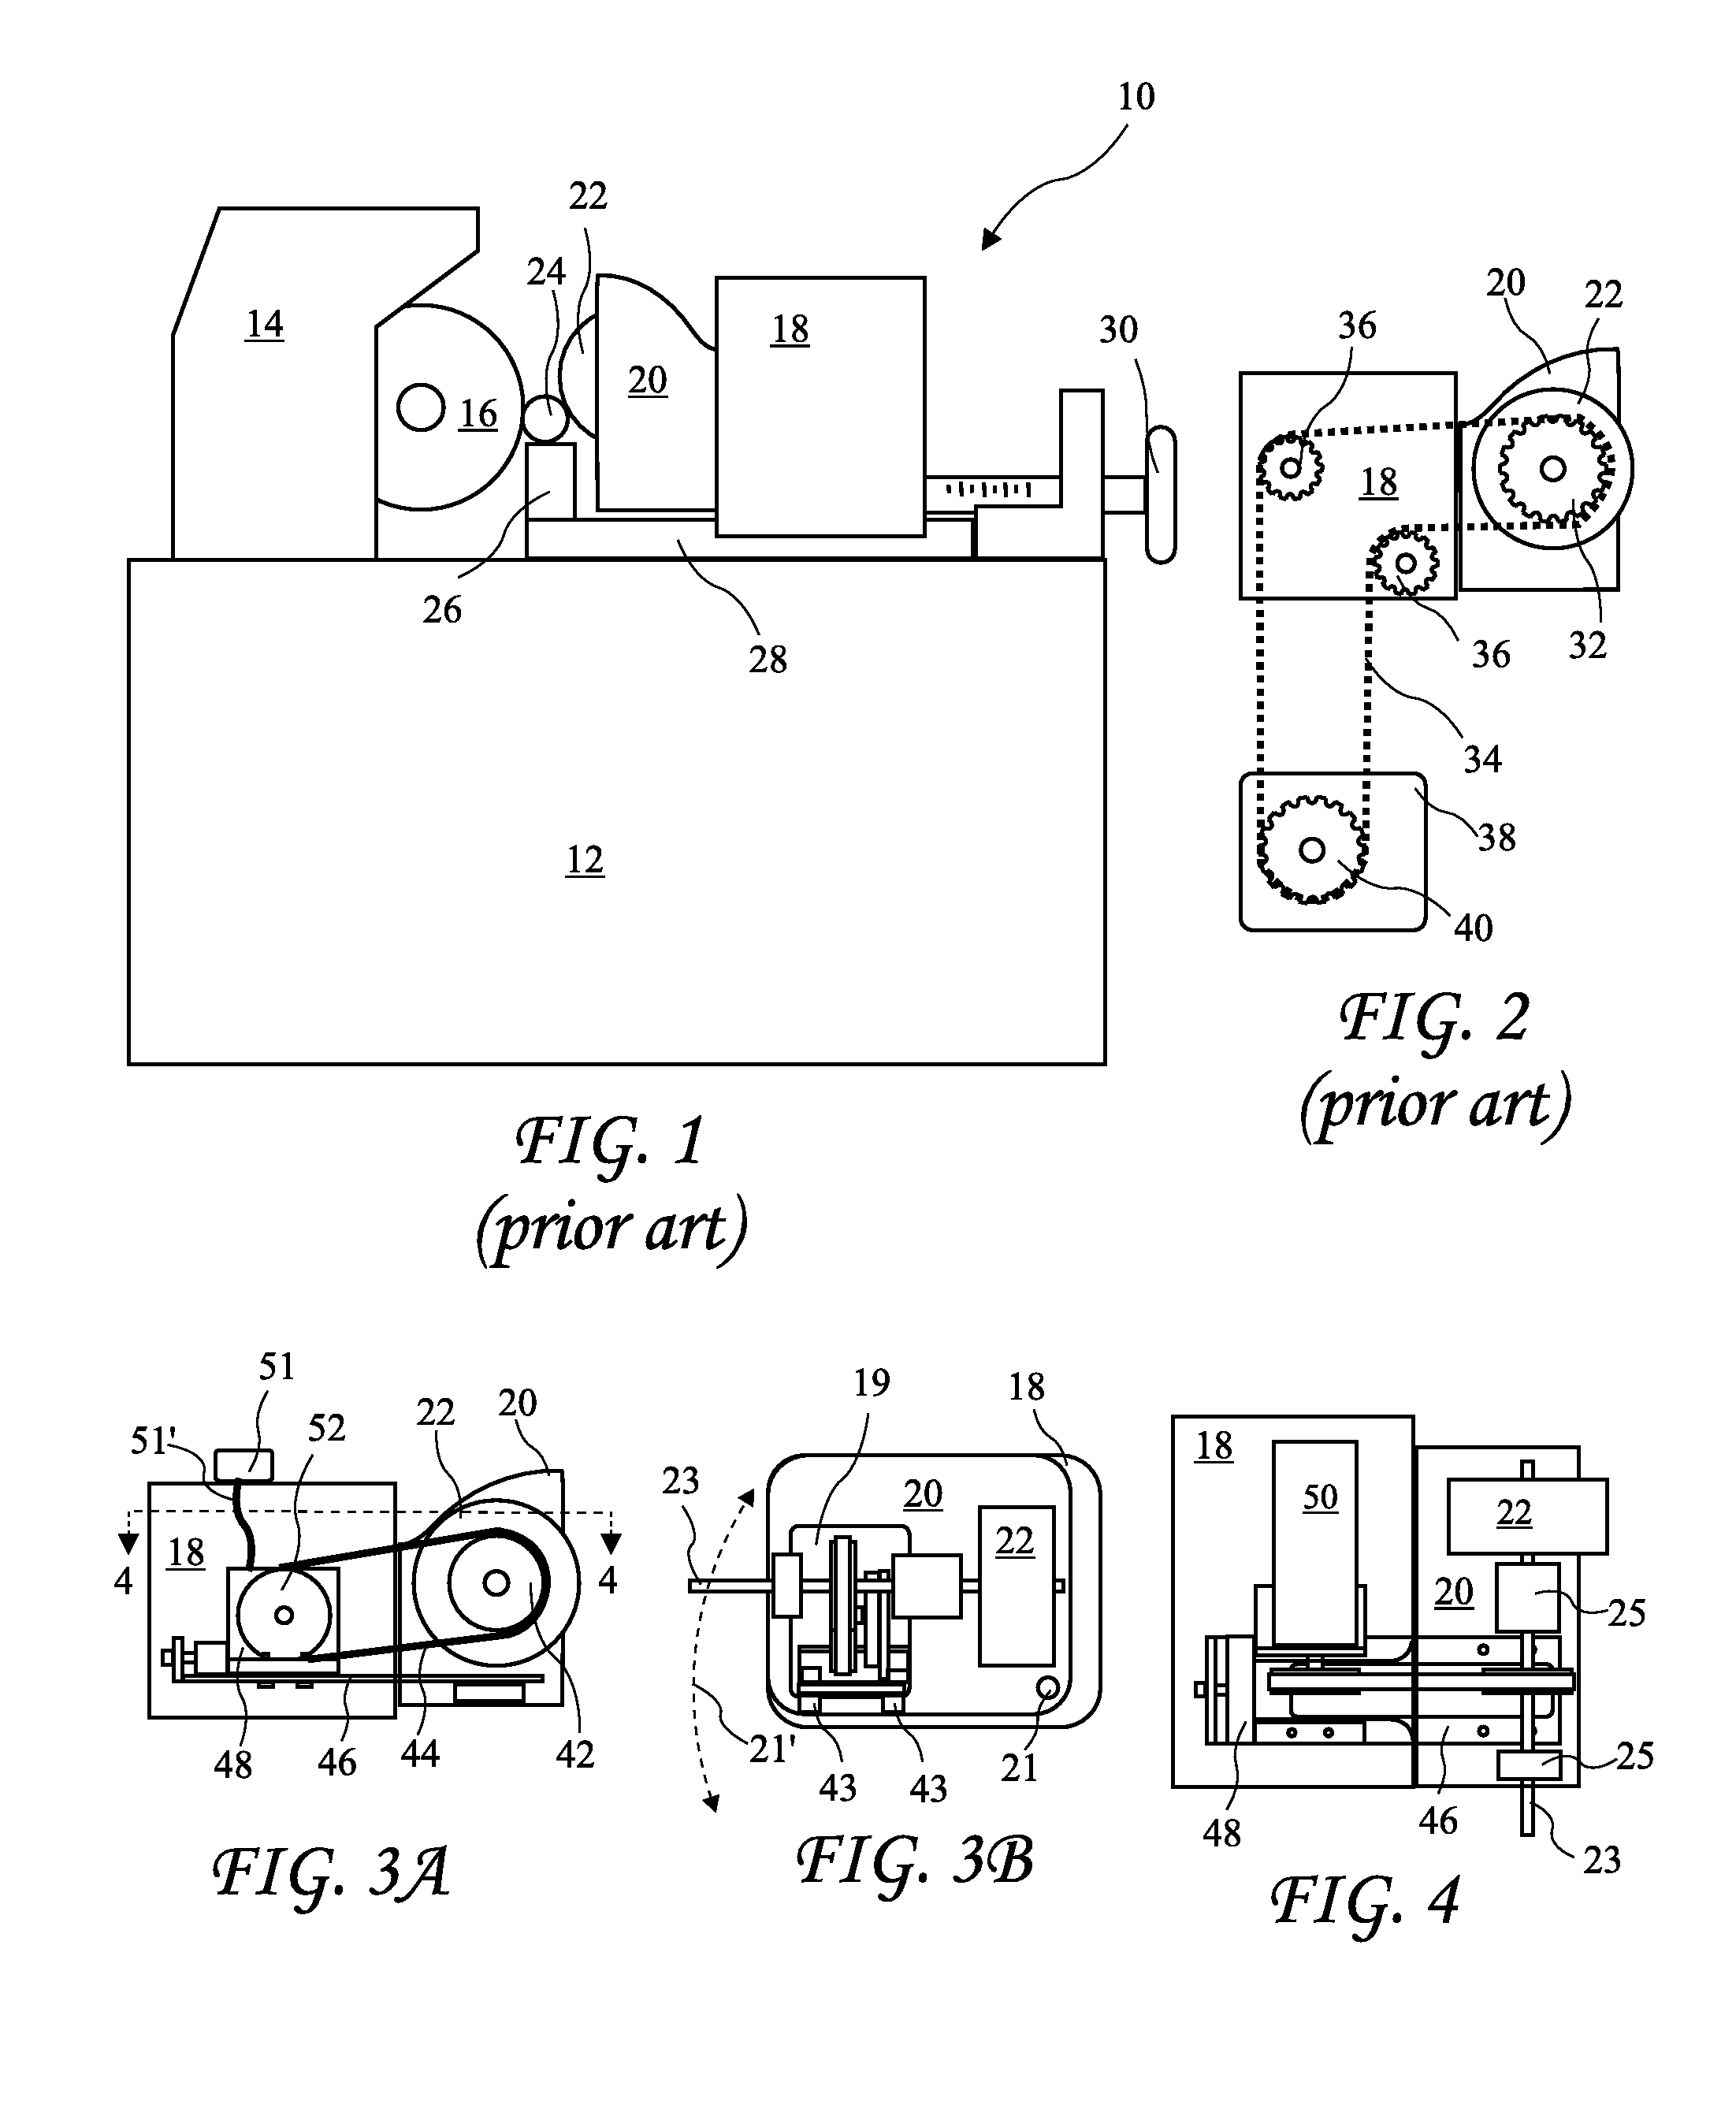 Centerless grinder with servo motor